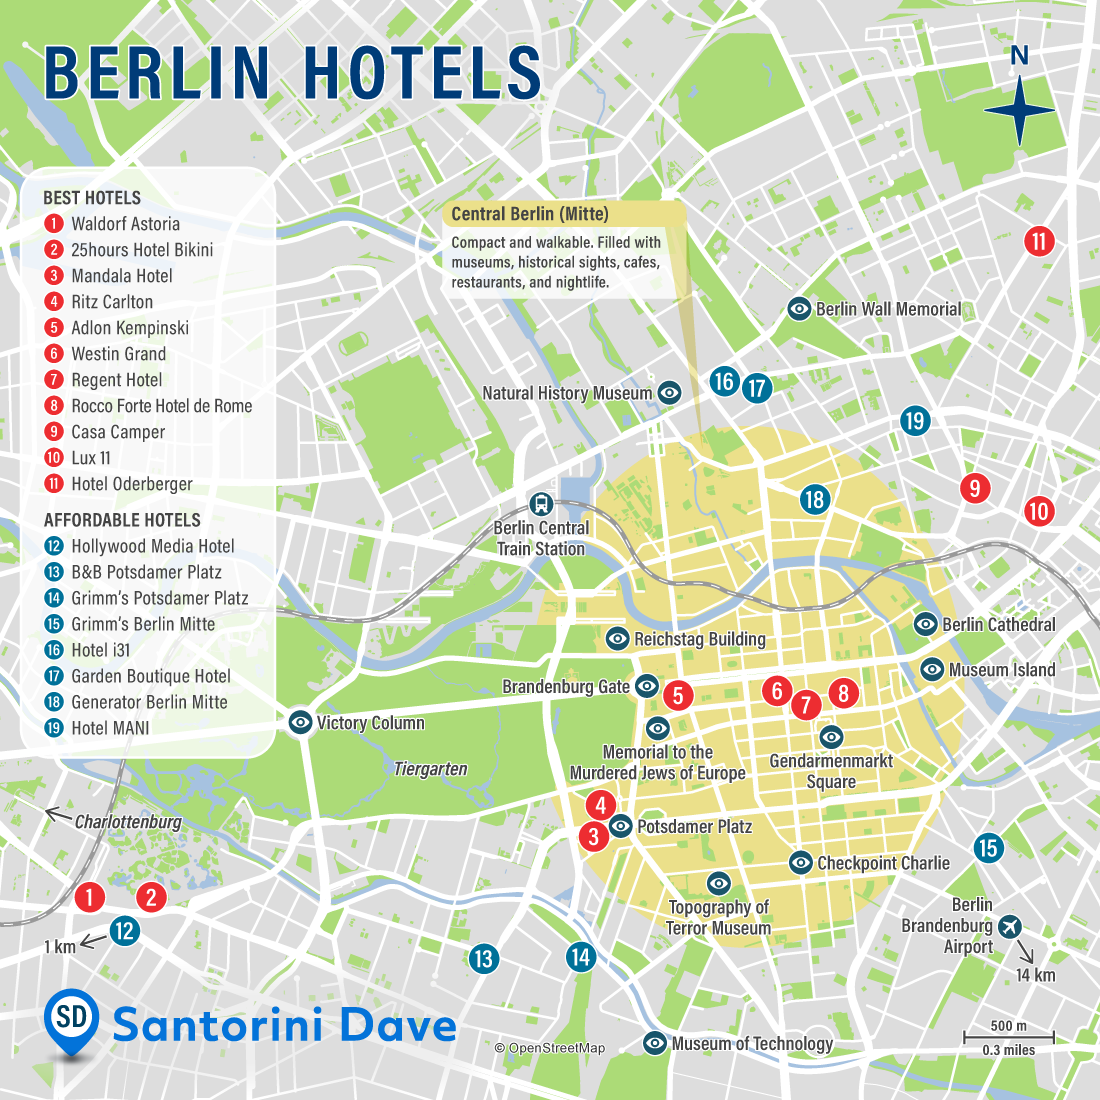 Map of Berlin hotels and neighborhoods